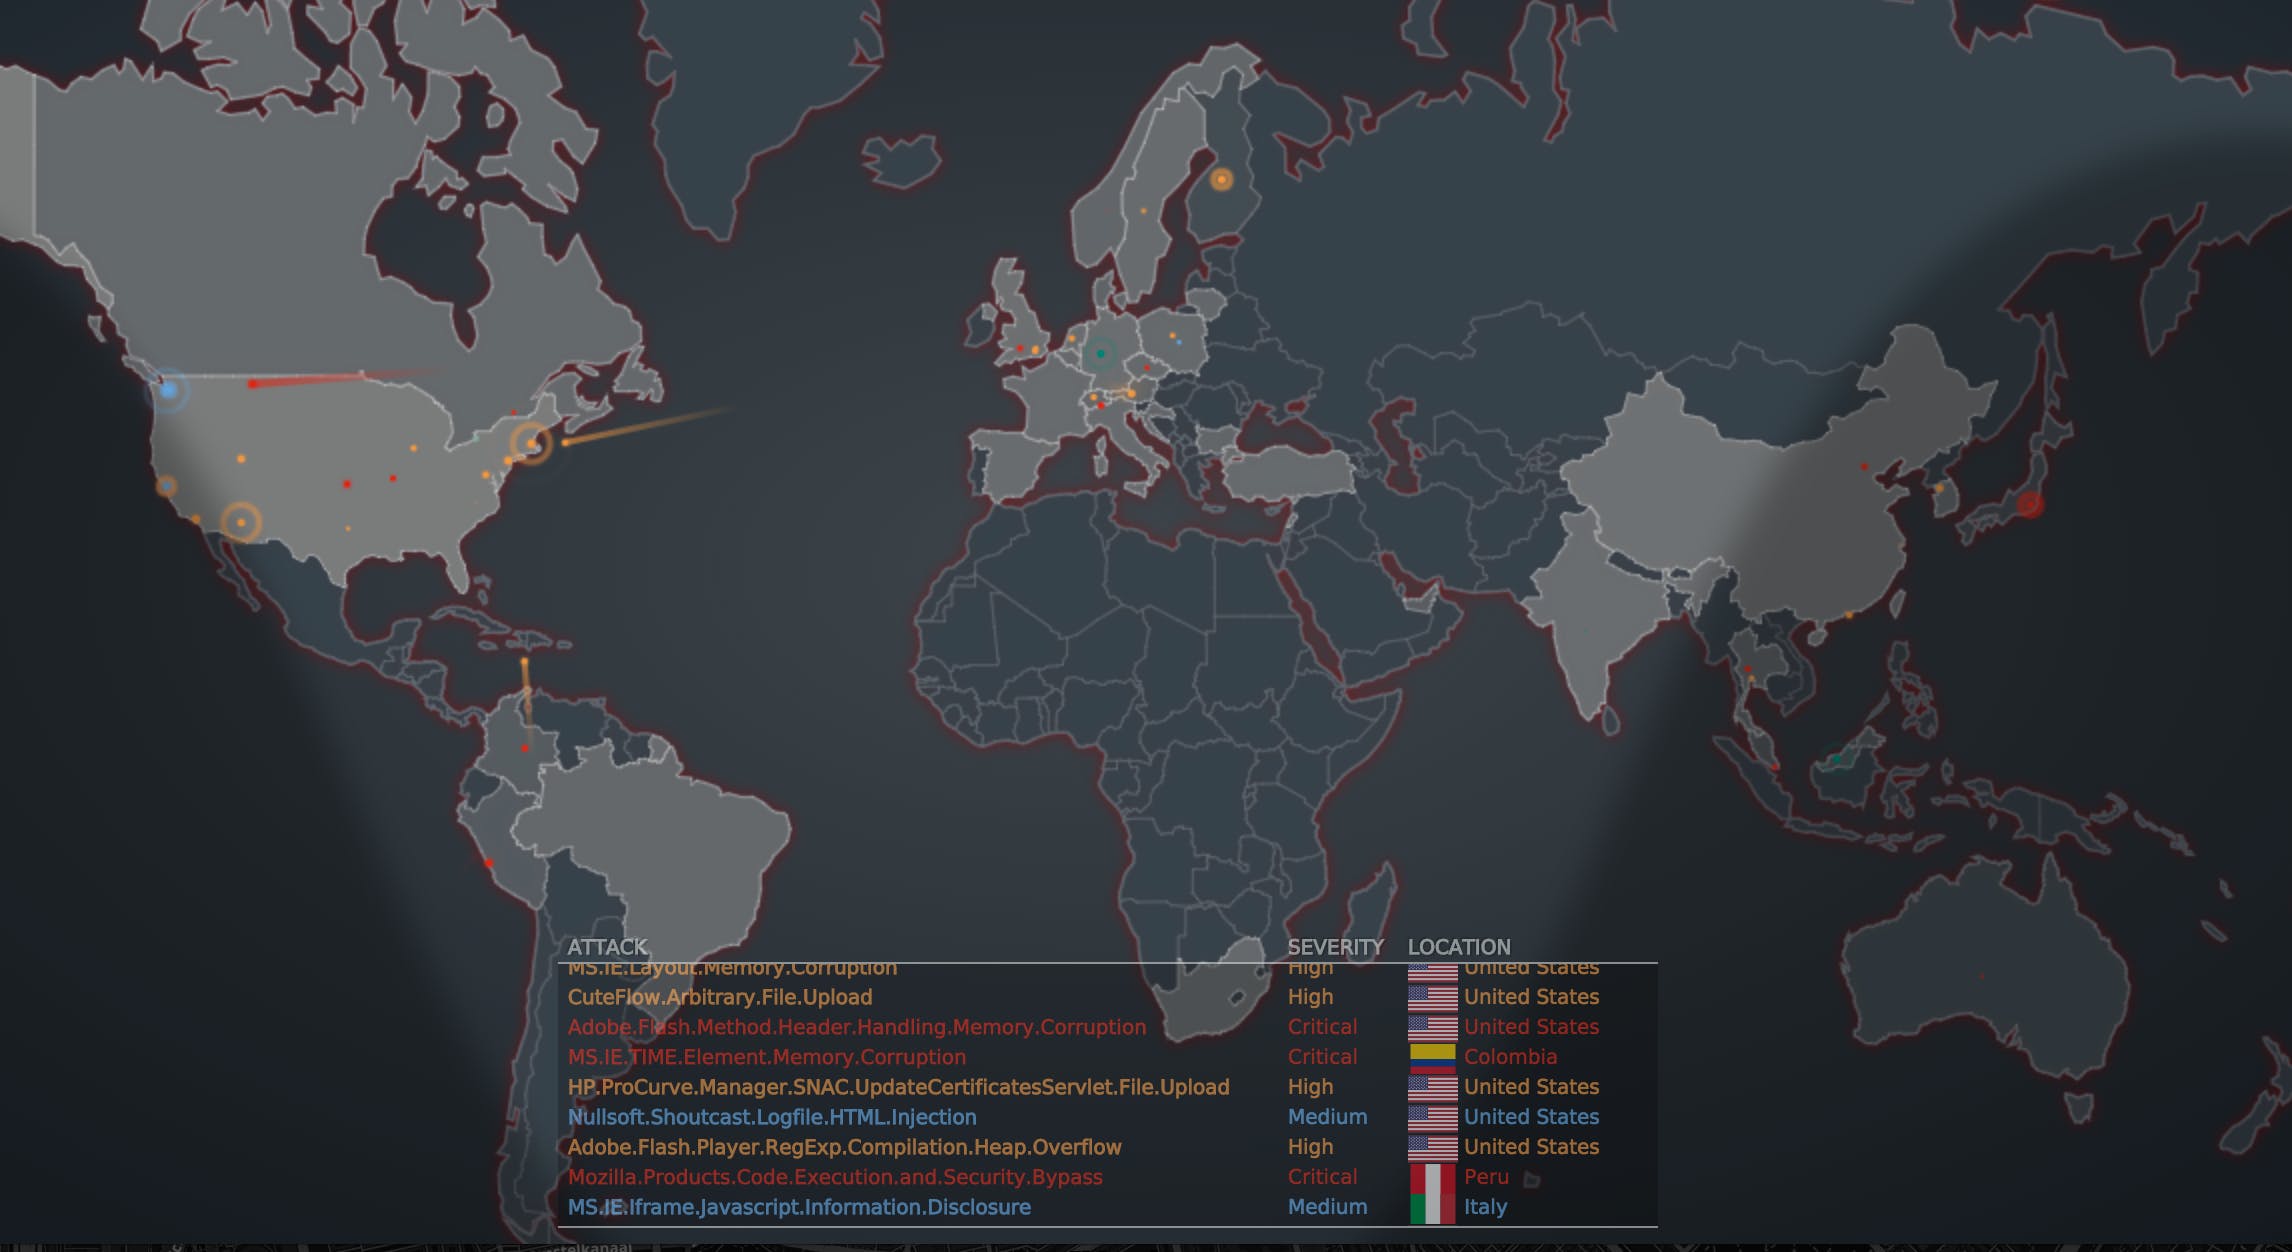 Fortinet Threat Map media 1